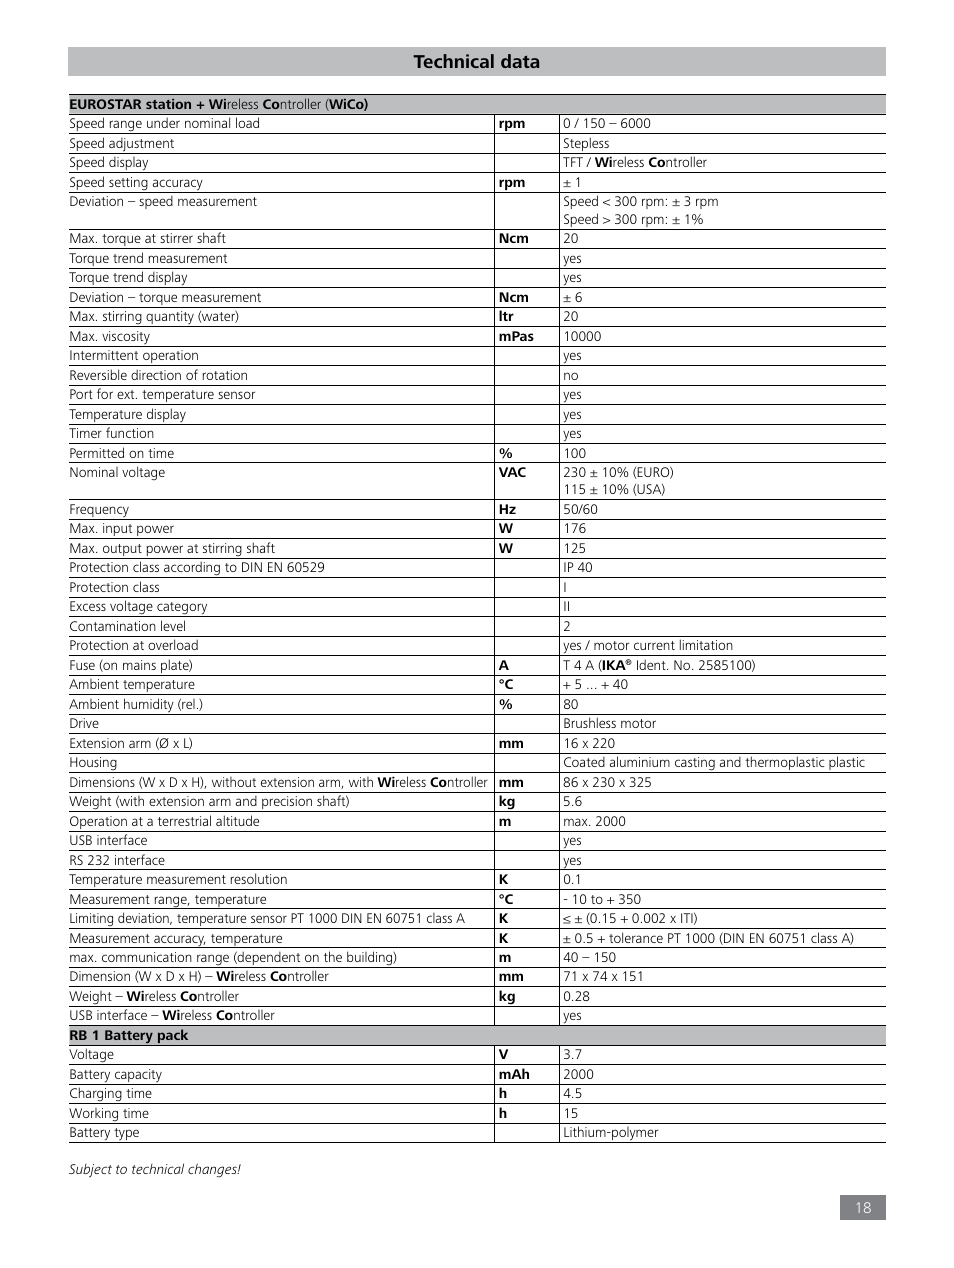 Technical data | IKA EUROSTAR 20 high speed control User Manual | Page 18 / 19